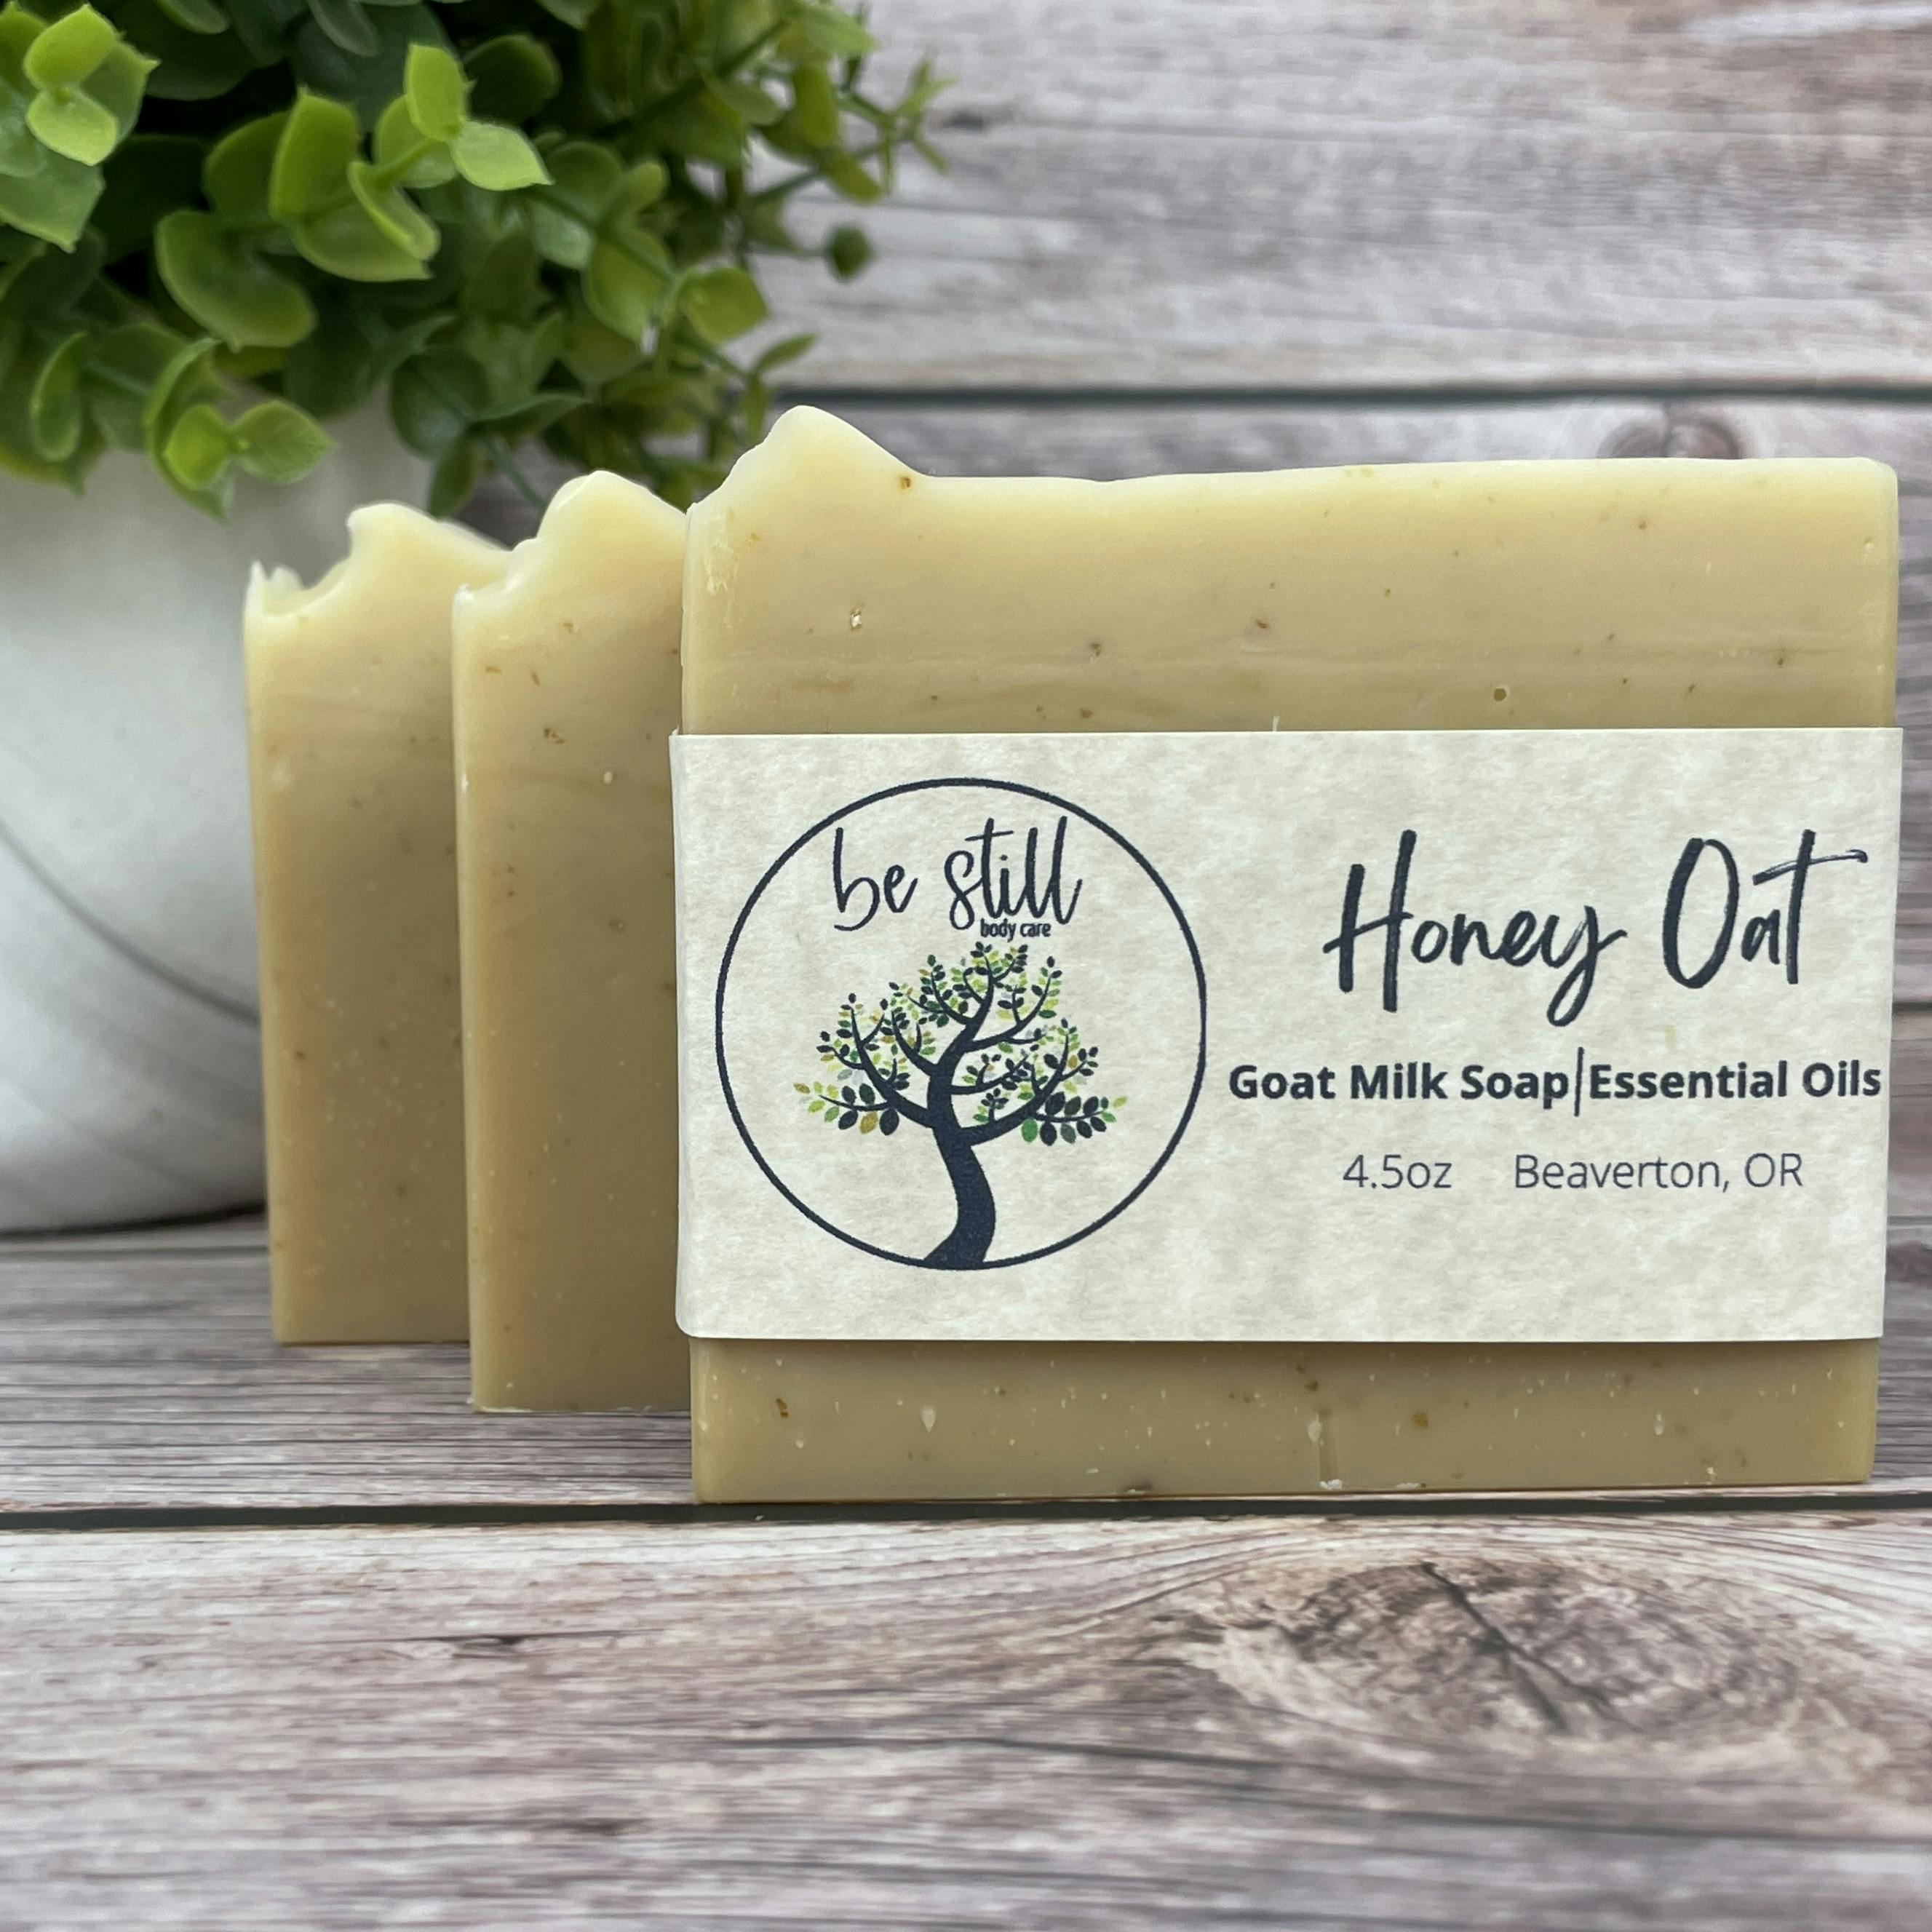 Honey Oat Goat Milk Soap - 4.5oz